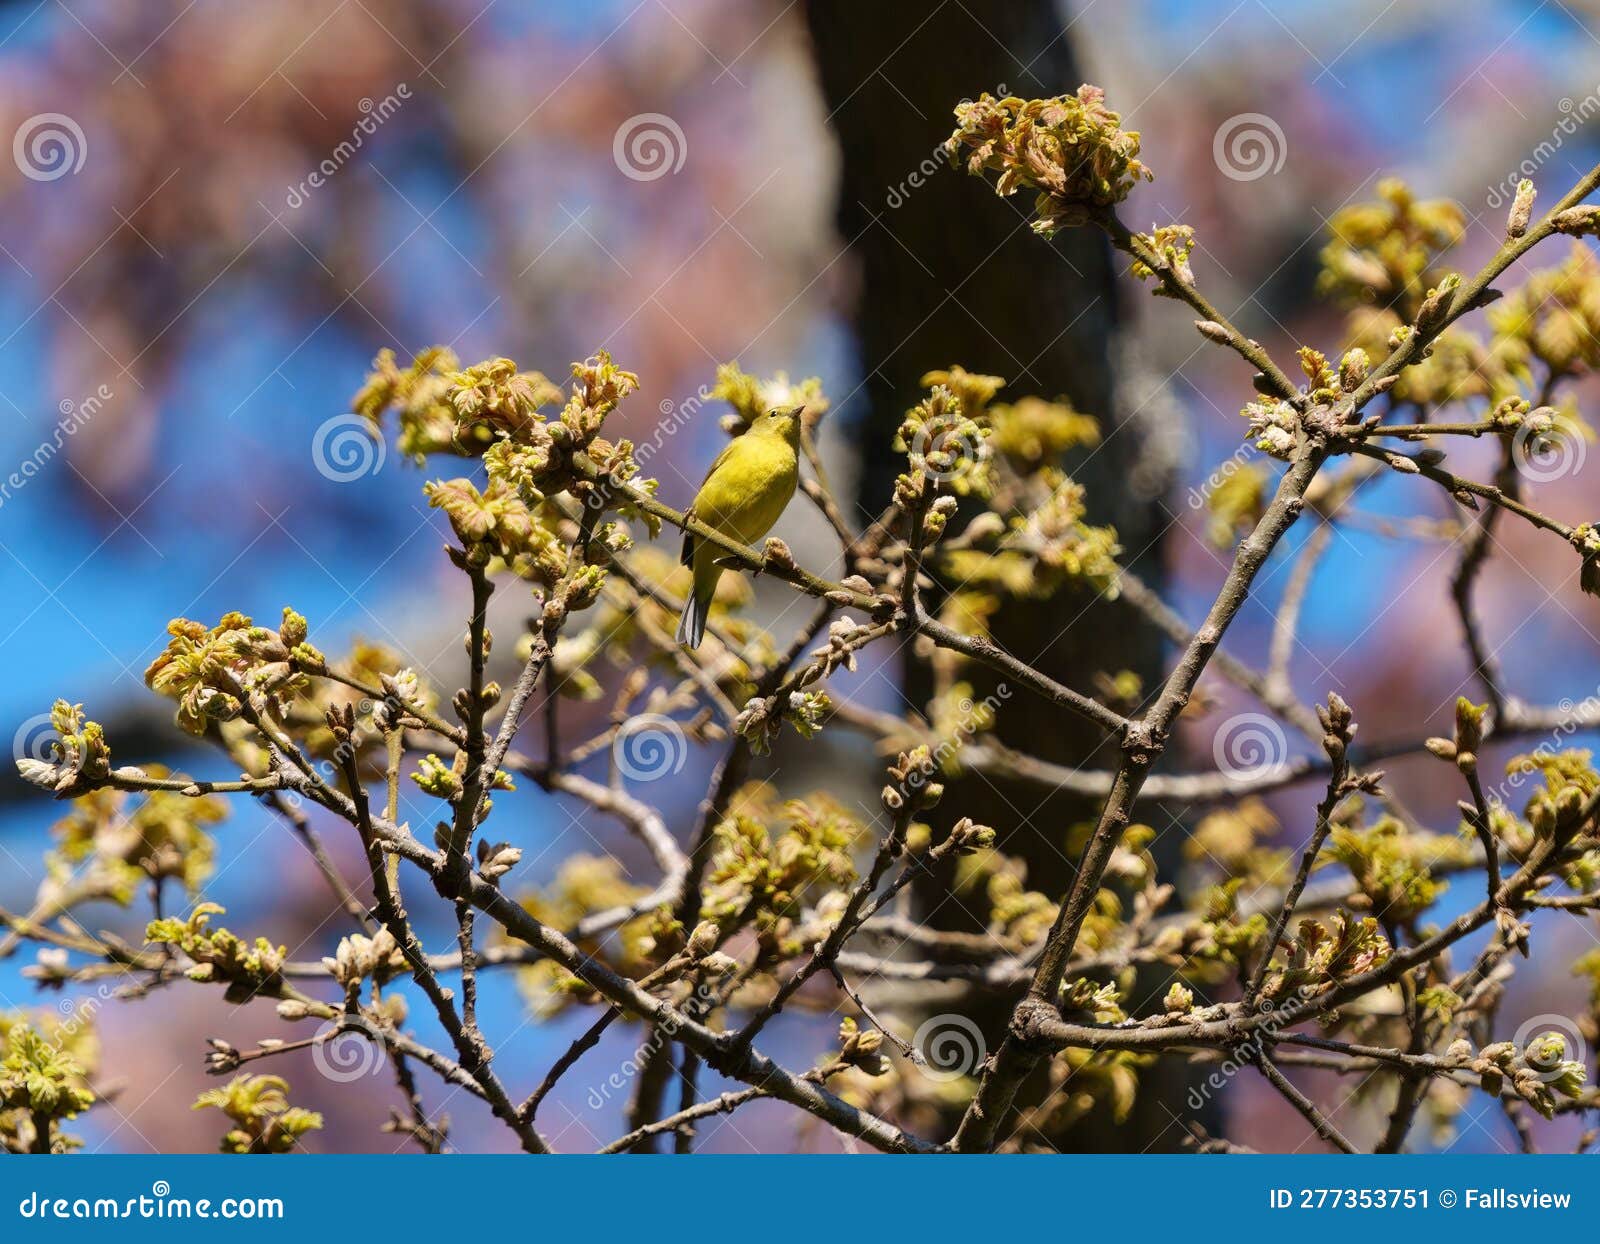 Orange Crowned Warbler Feeding on Tree Top Stock Image - Image of ...